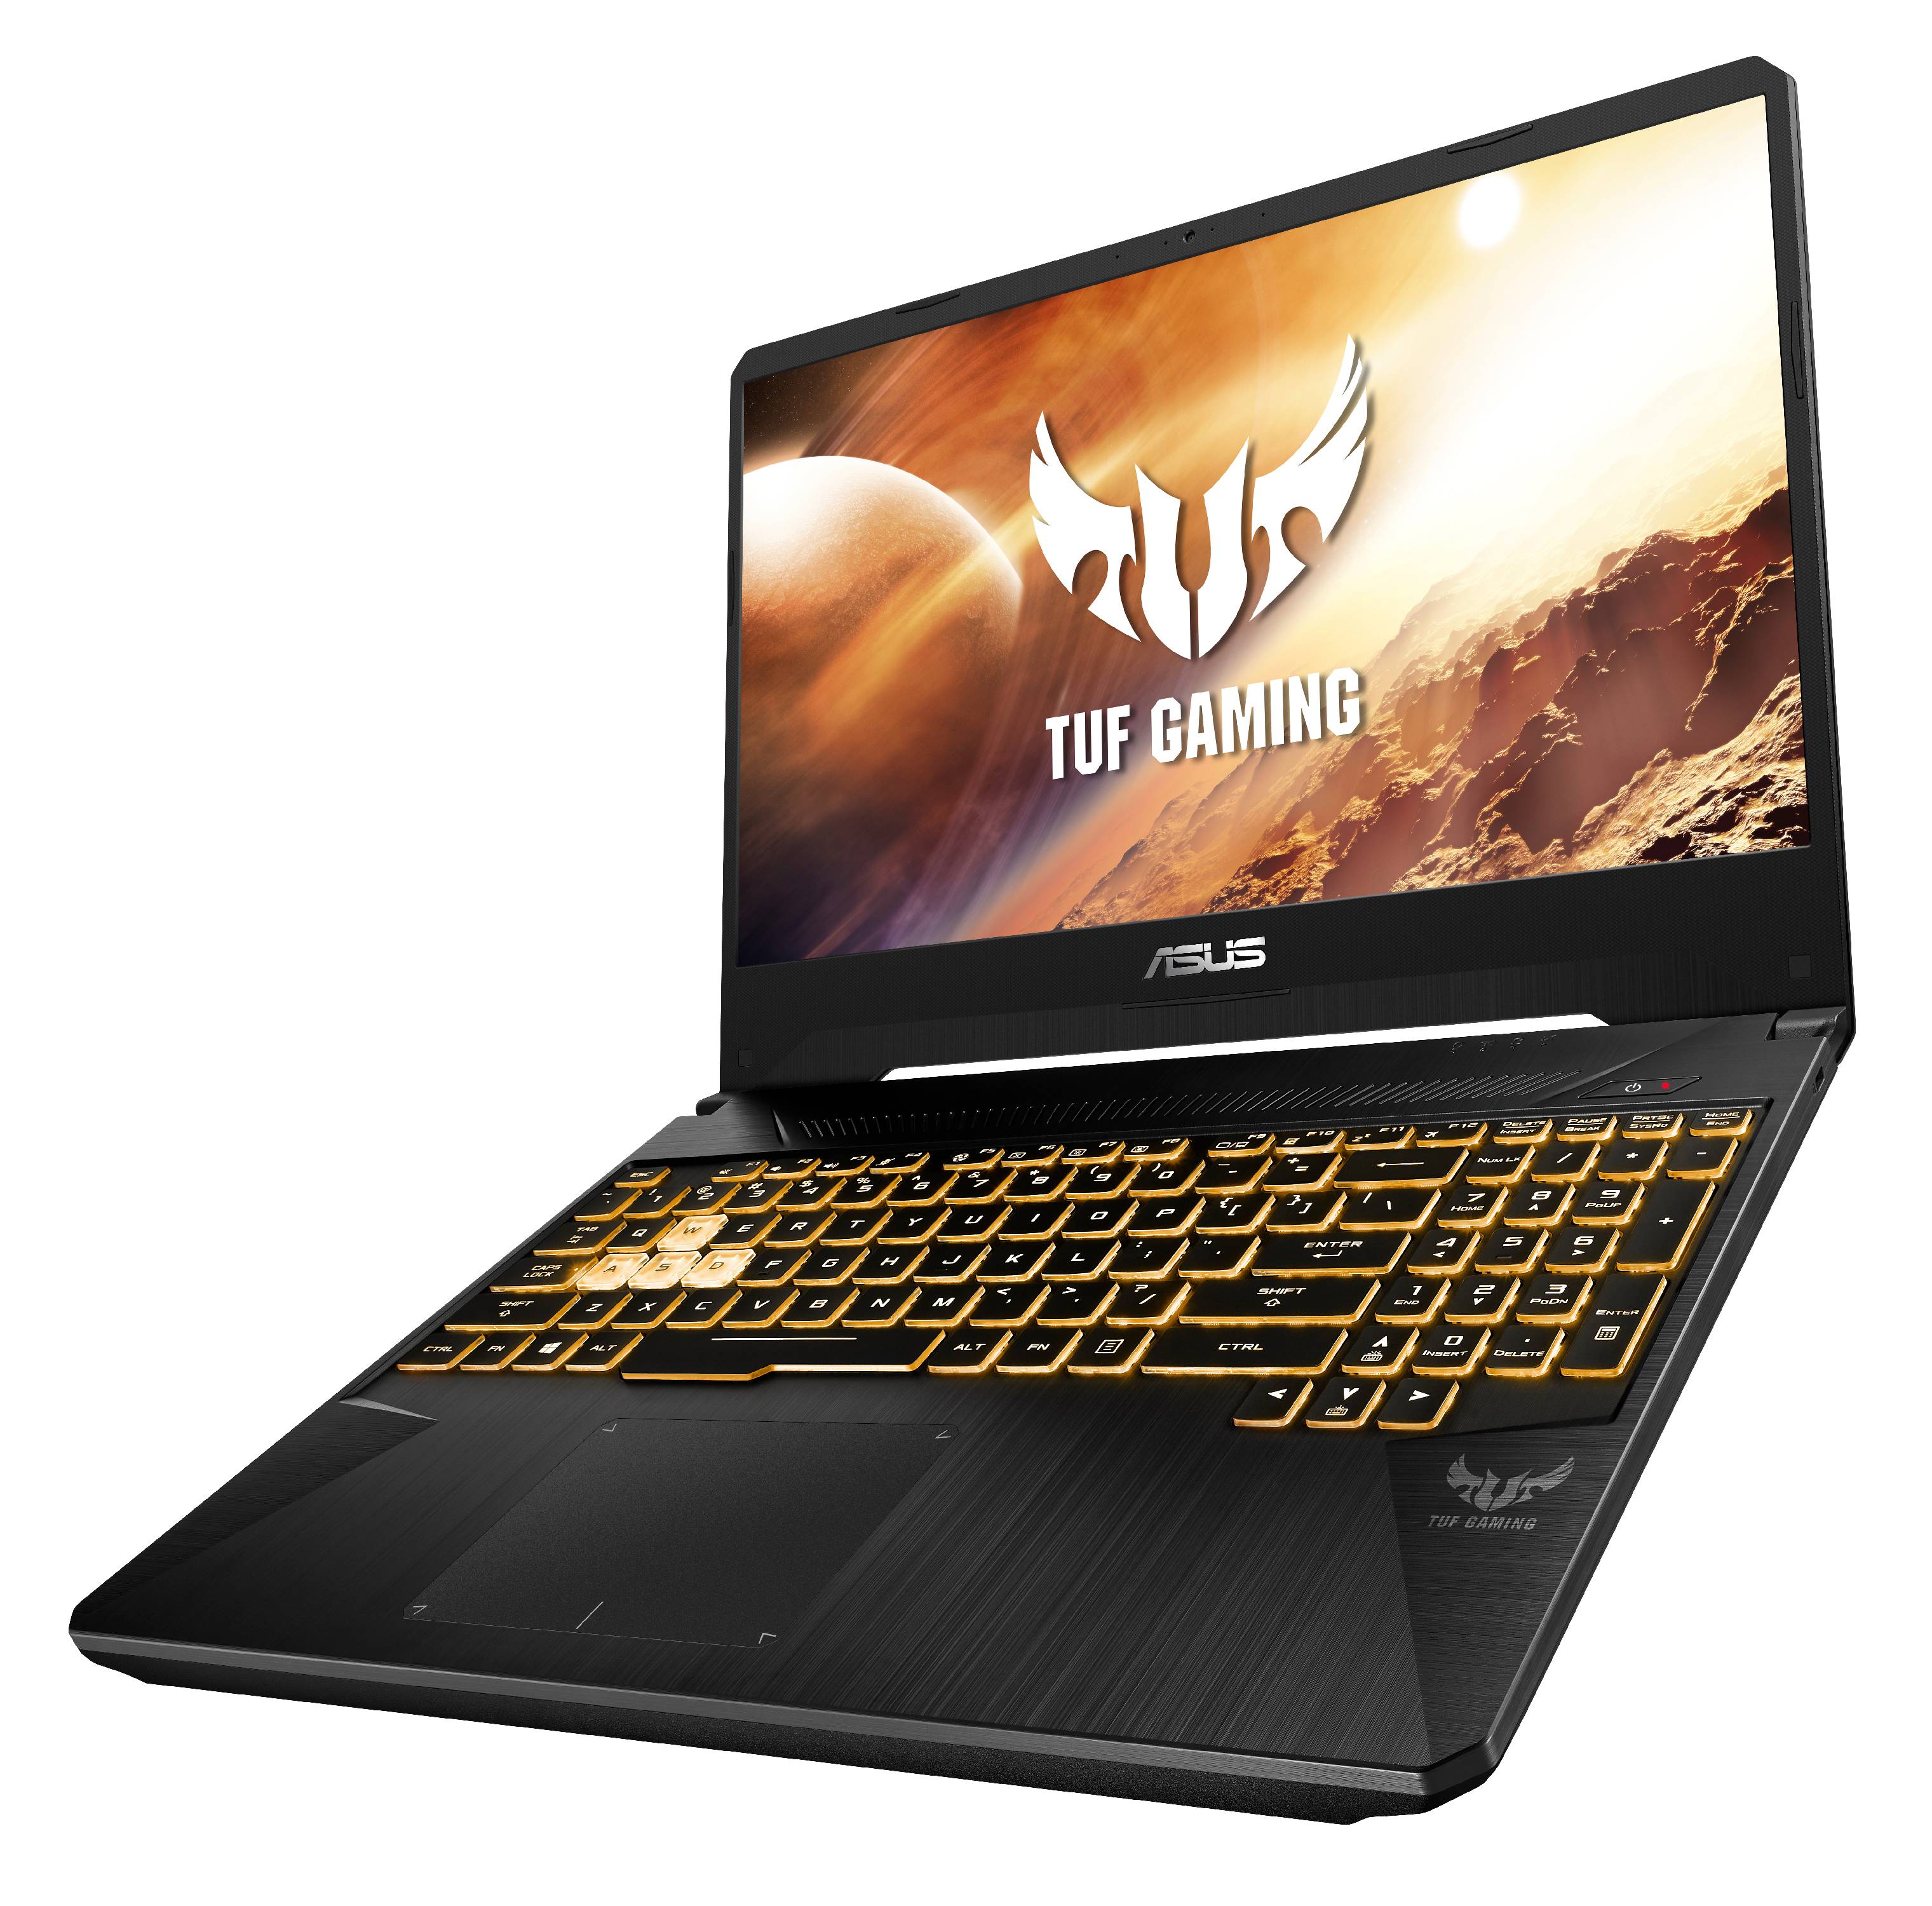 ASUS 15.6" FHD Gaming Laptop, AMD Ryzen 7 R7-3750H, 8GB RAM, NVIDIA GeForce GTX 1650 4GB, 256GB SSD, Windows 10 Home, Black, FX505DT-WB72 - image 3 of 6